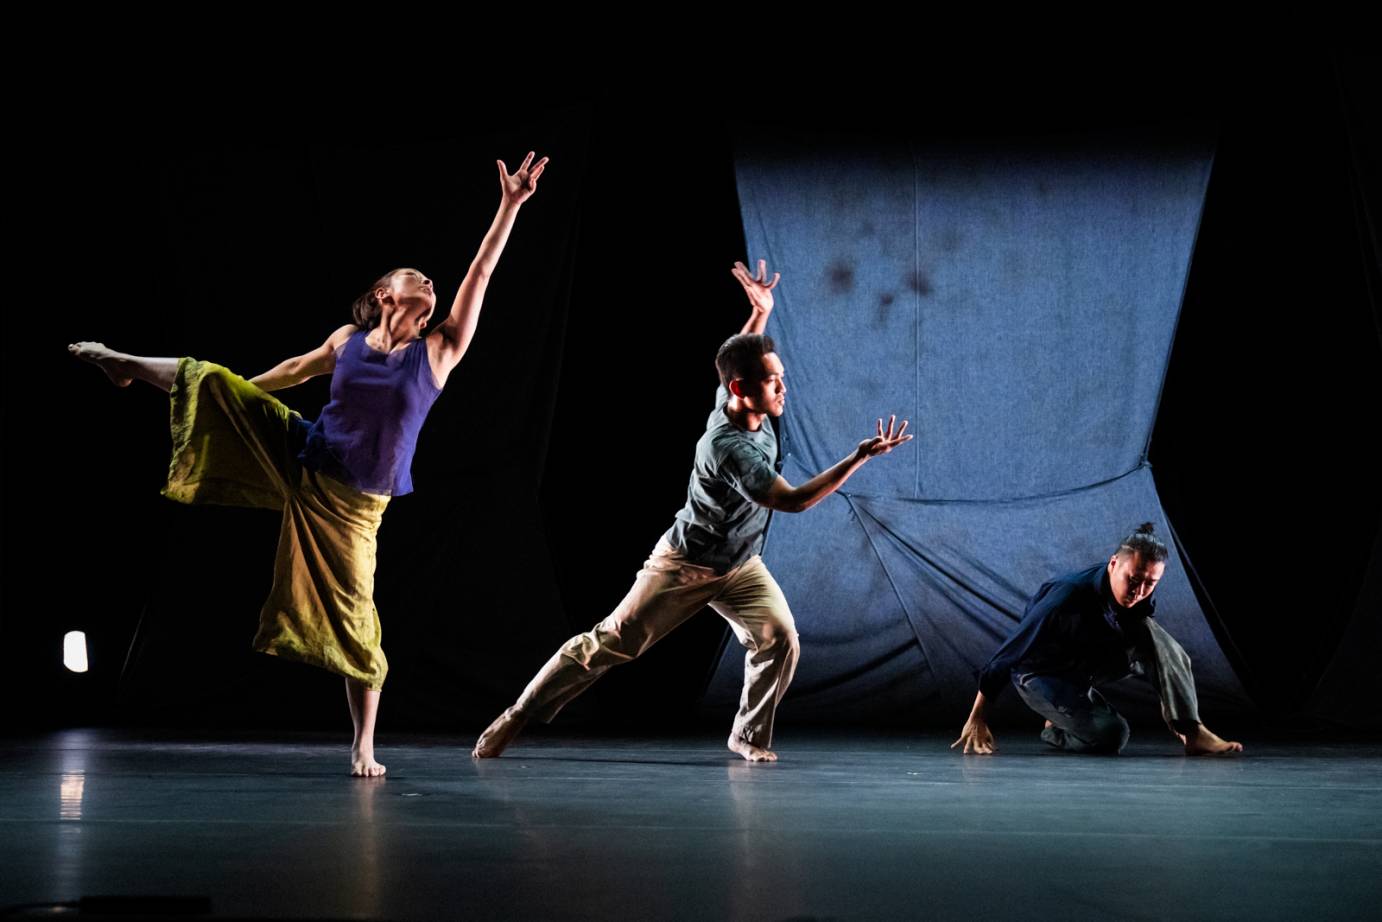 In a diagonal, three dancers gesture emotionally